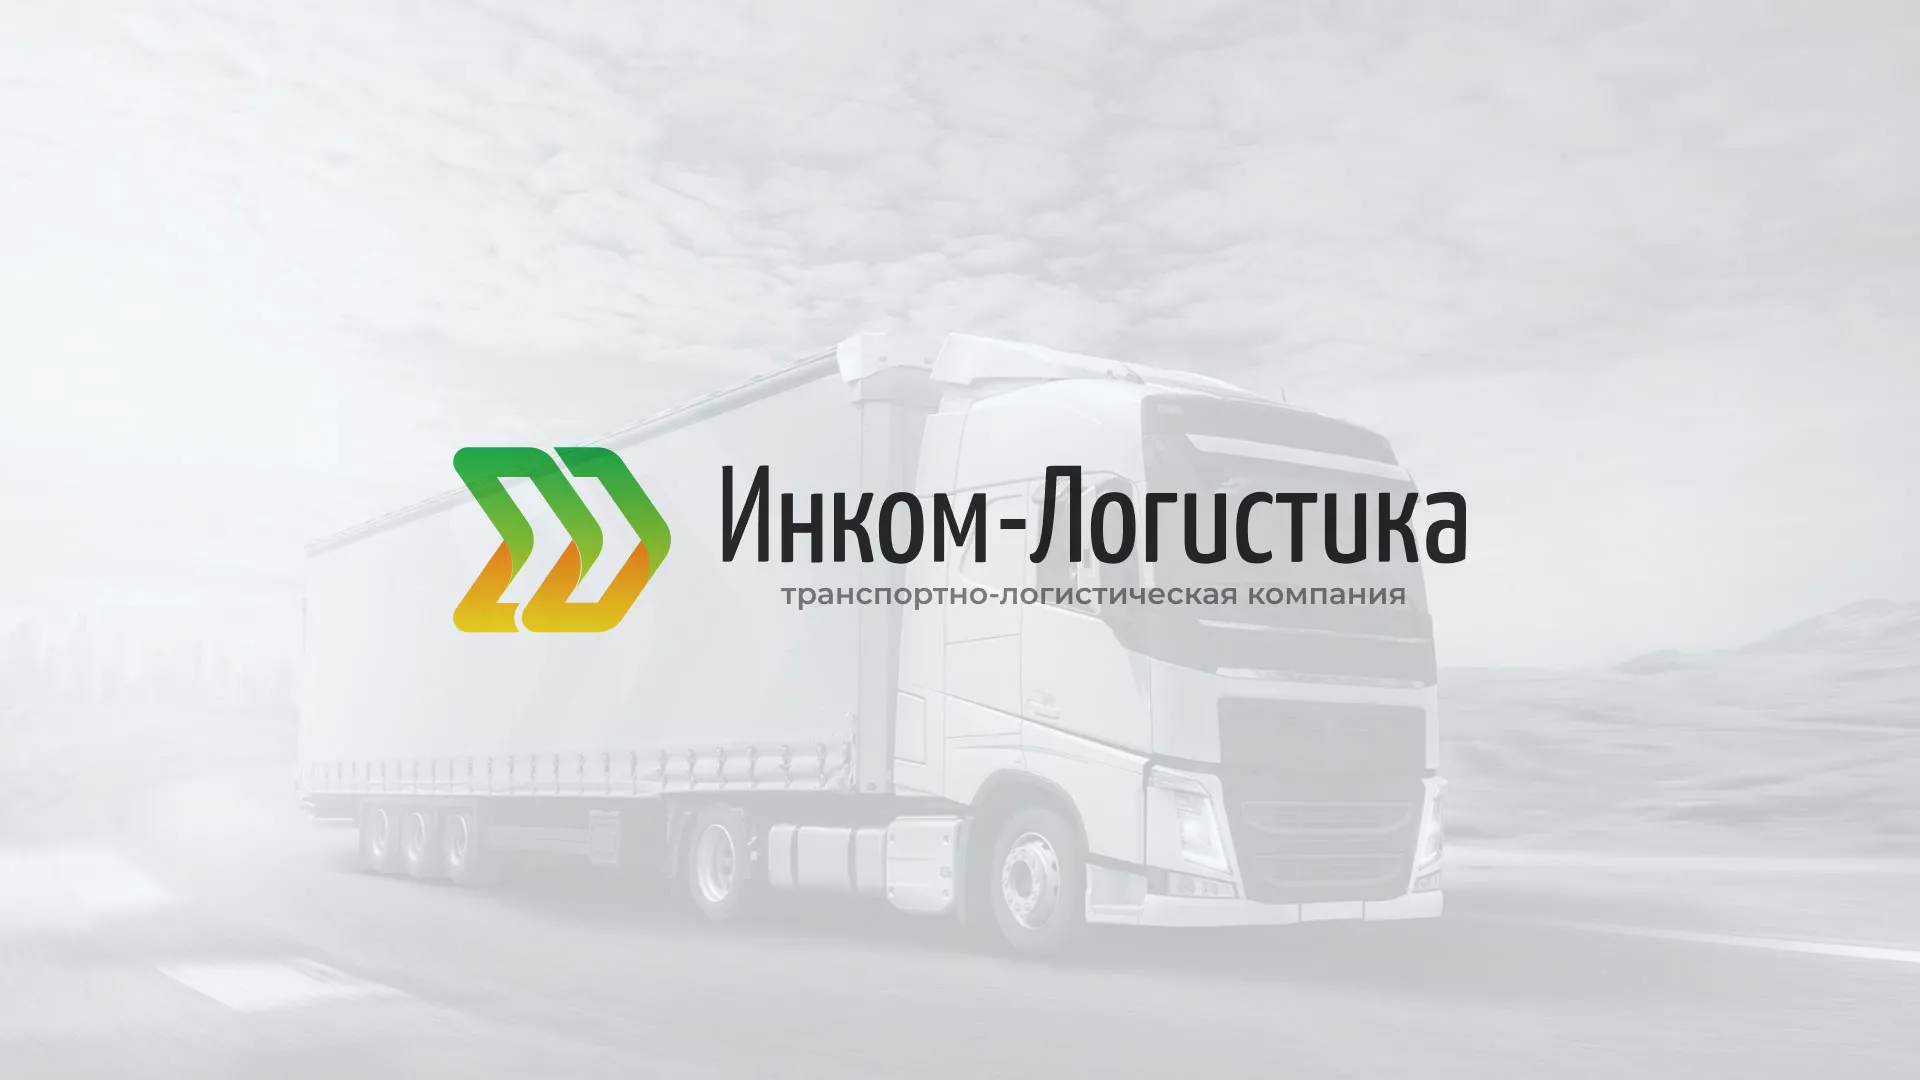 Разработка логотипа и сайта компании «Инком-Логистика» в Порхове